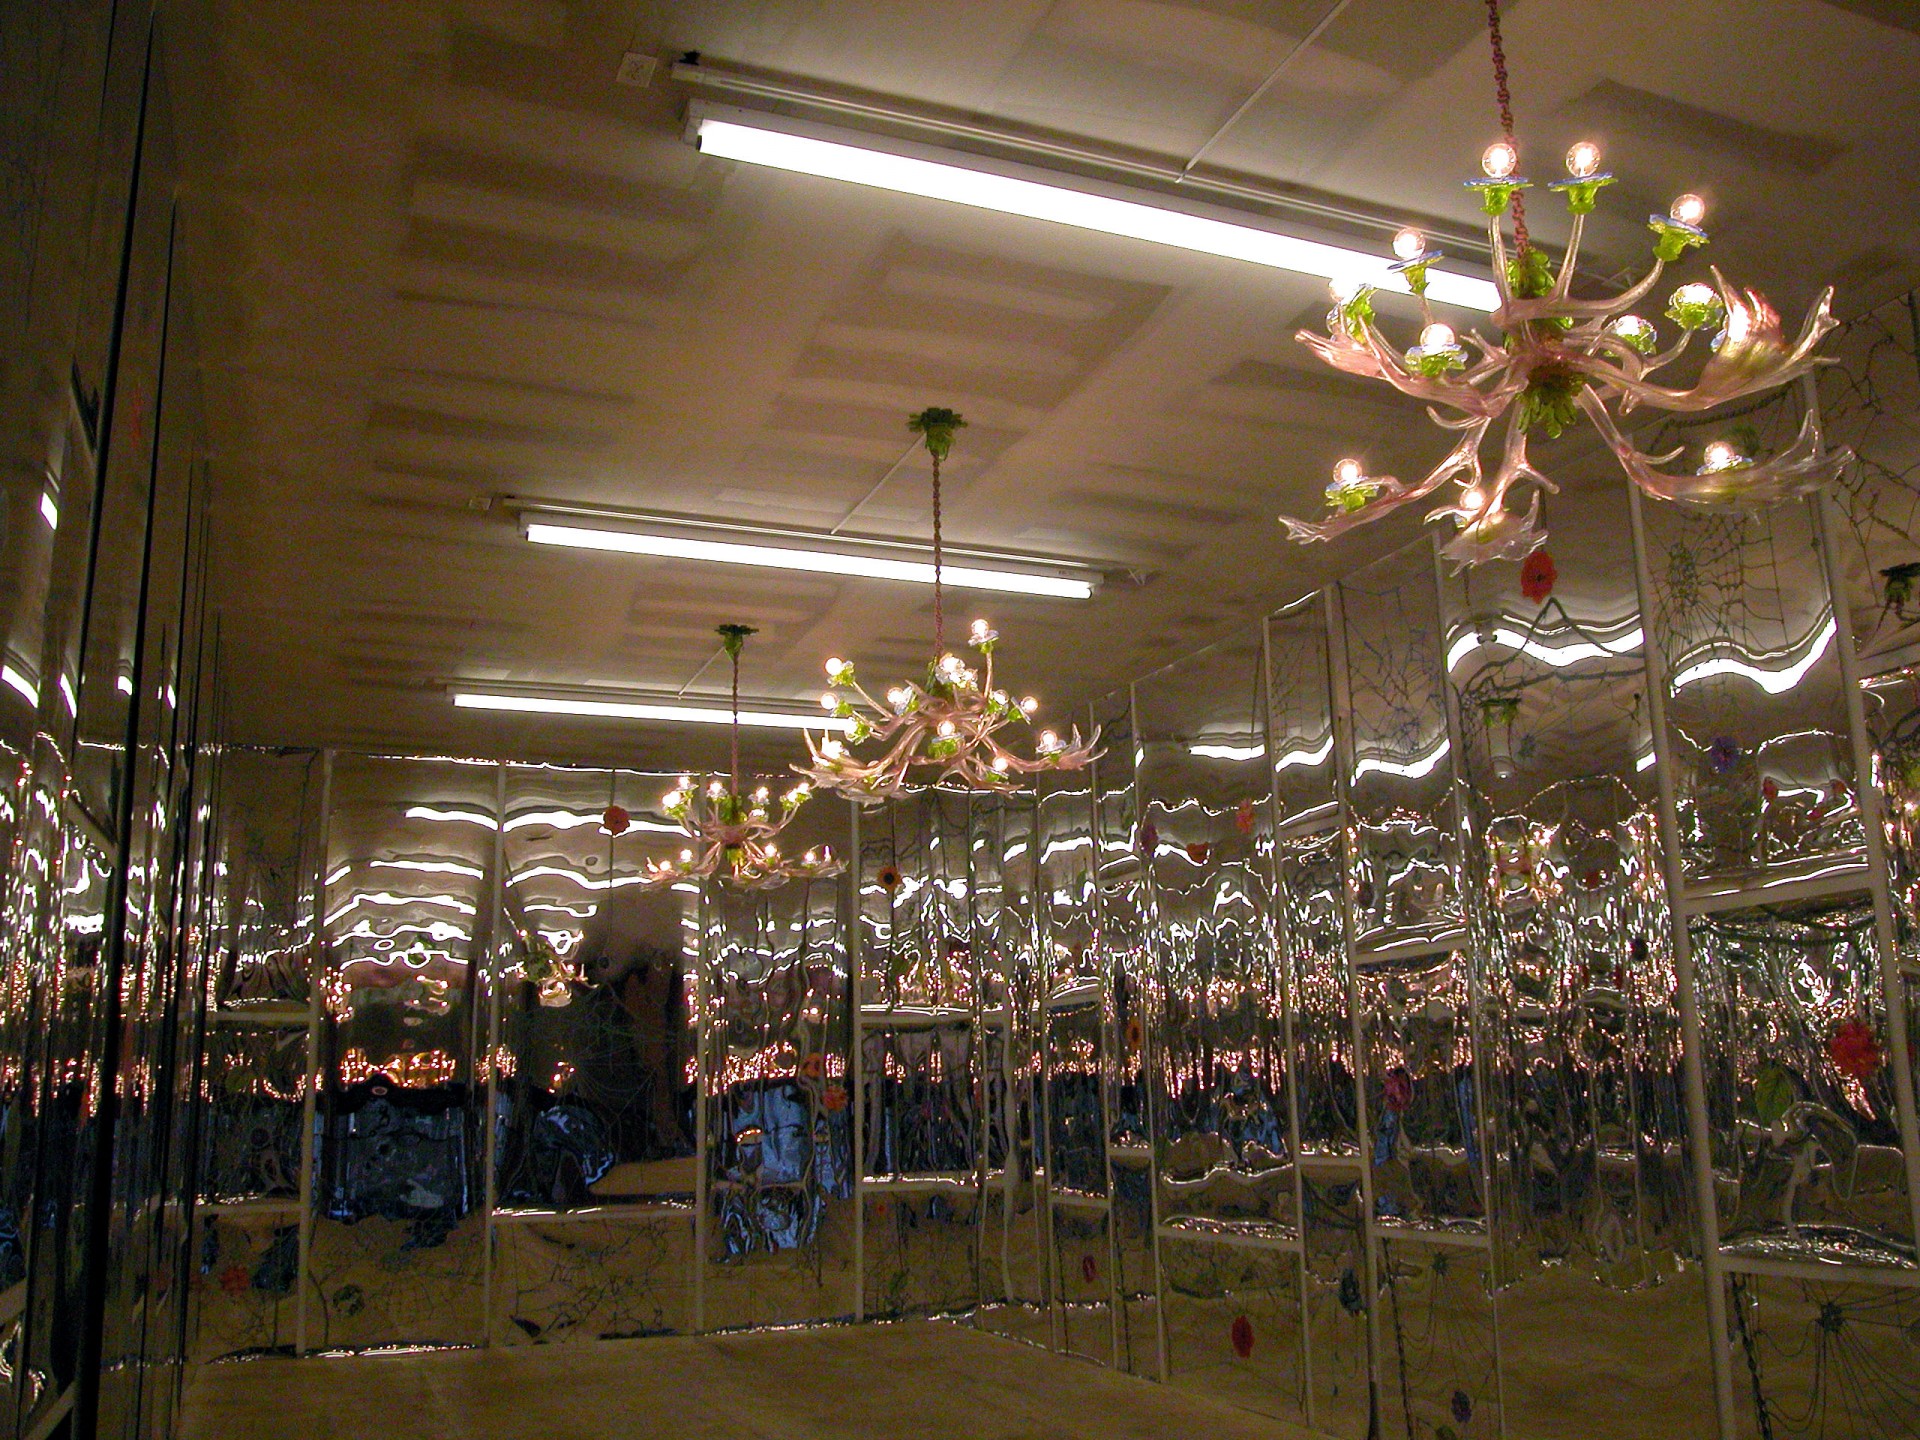 Virgil Marti, GROW ROOM, 2002. Installation view at Participant Inc, New York. Photos: Aaron Igler 